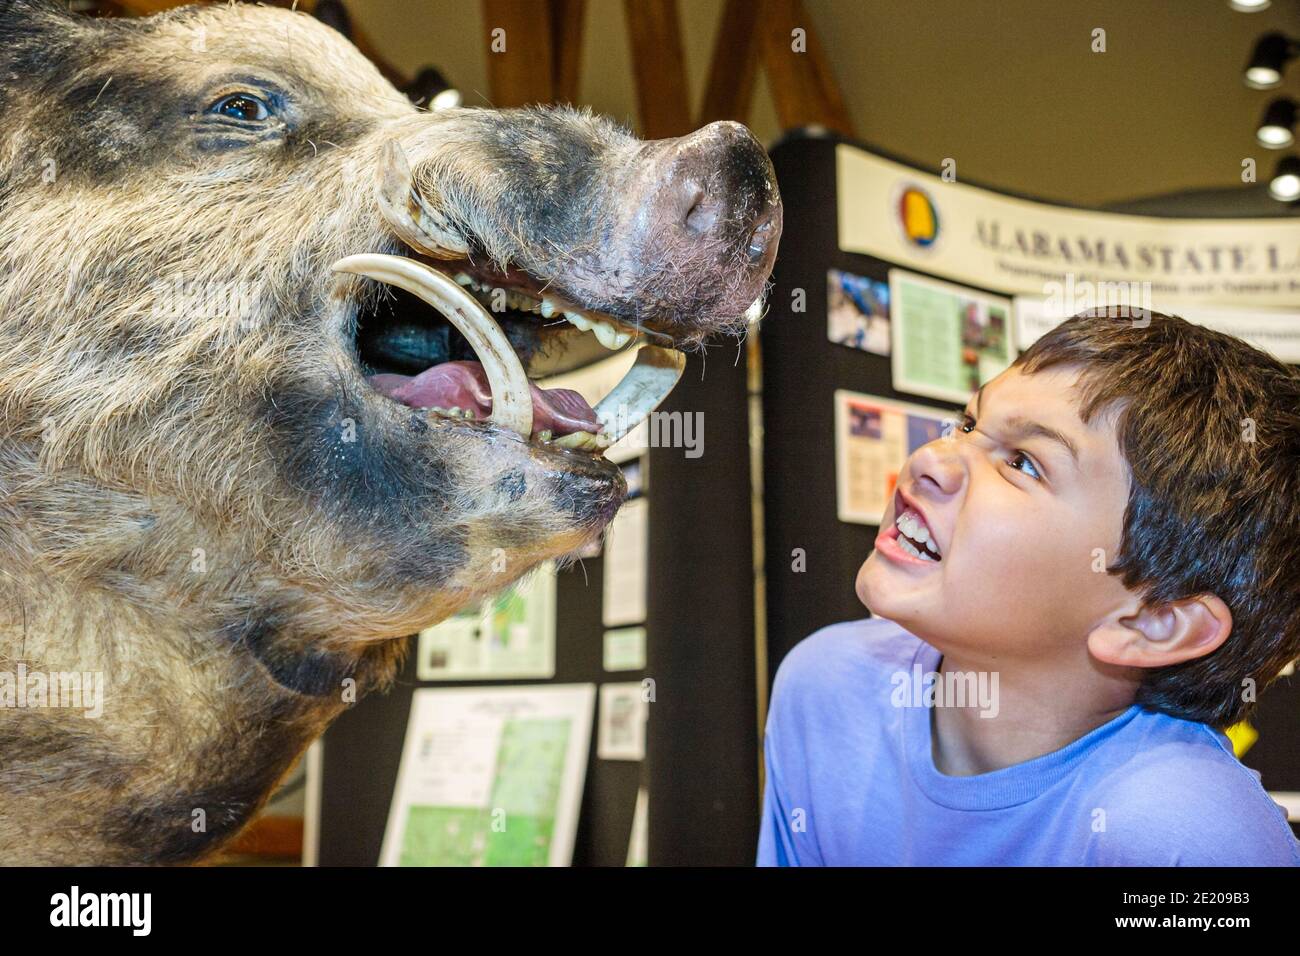 Alabama Spanish Fort 5 Rivers Alabama Delta Resource Center centre,exhibit wild boar Asian boy kid looking, Stock Photo